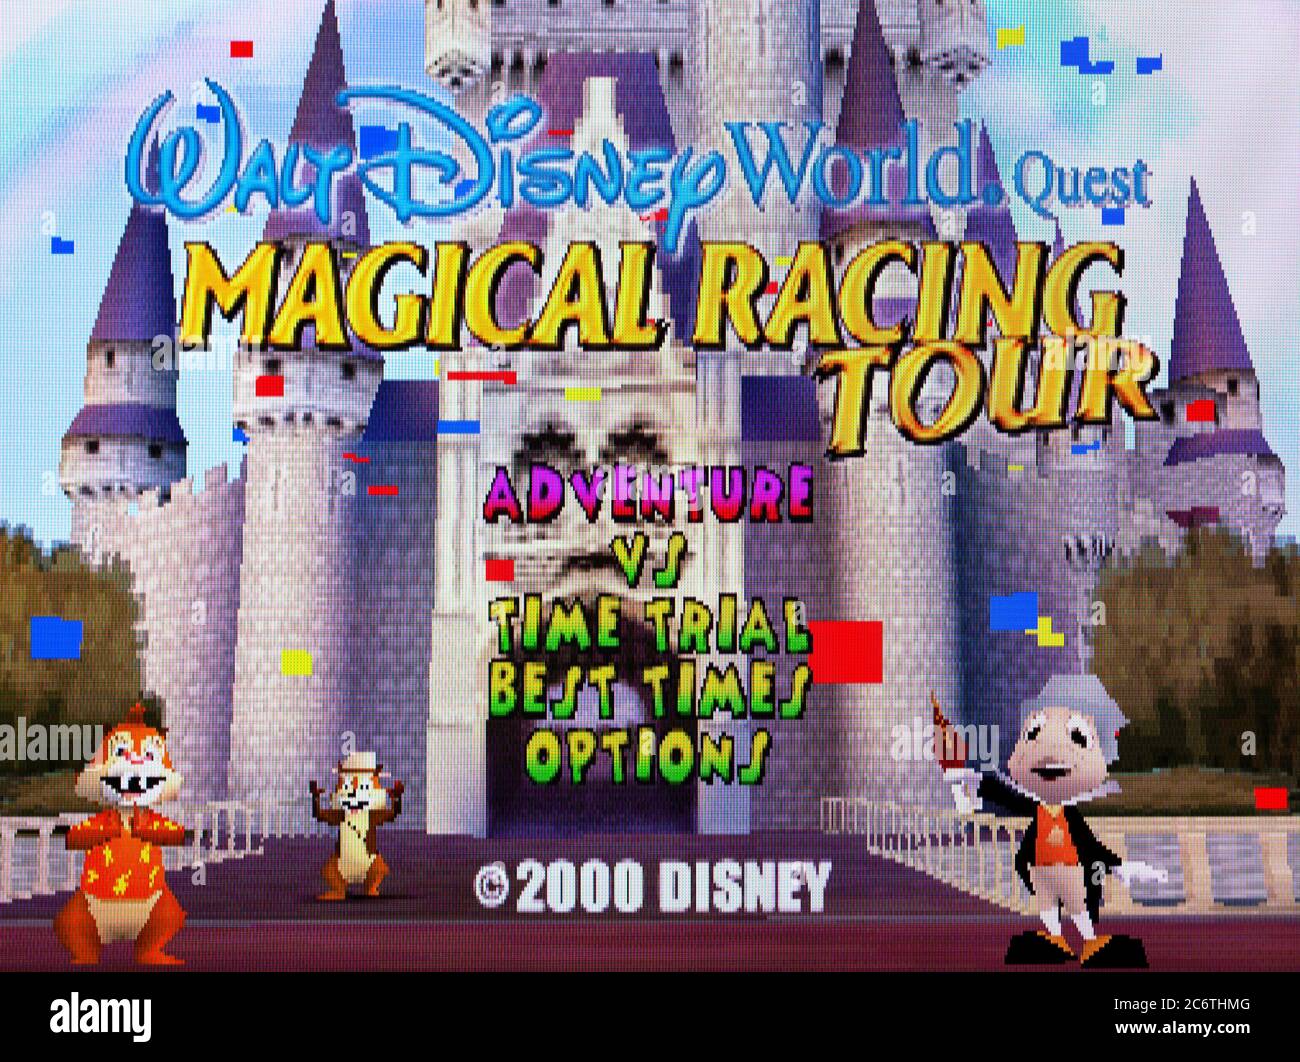 Walt Disney World Quest Magical Racing Tour - 1 PS1 PSX - Editorial use Stock Photo - Alamy